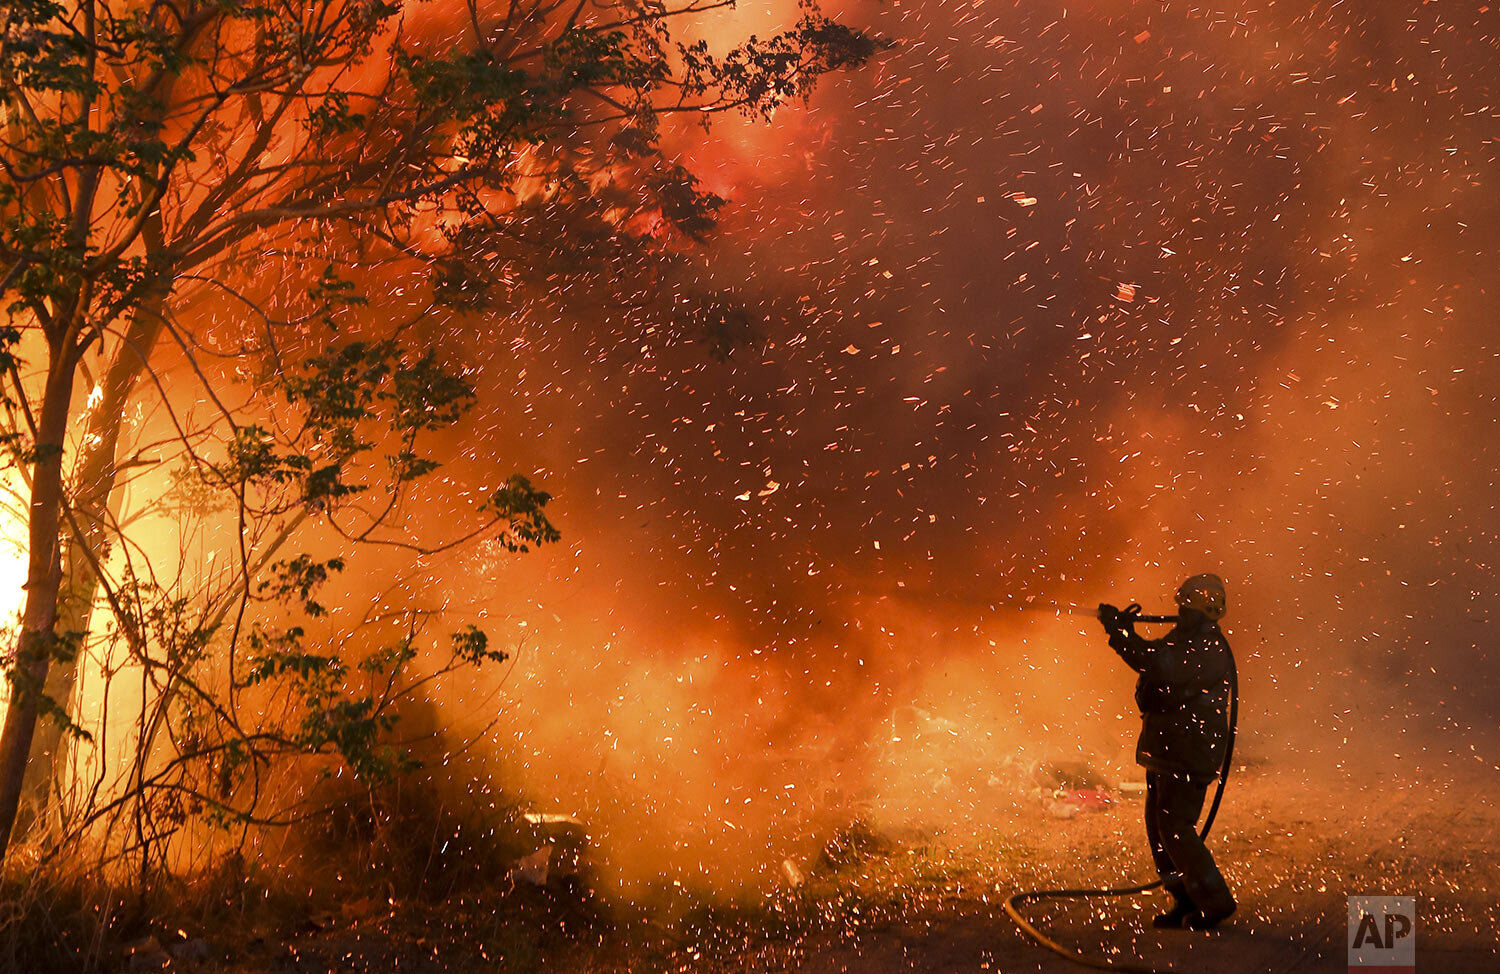  A firefighter battles flames in Cordoba, Argentina, Oct. 12, 2020. (AP Photo/Nicolas Aguilera) 